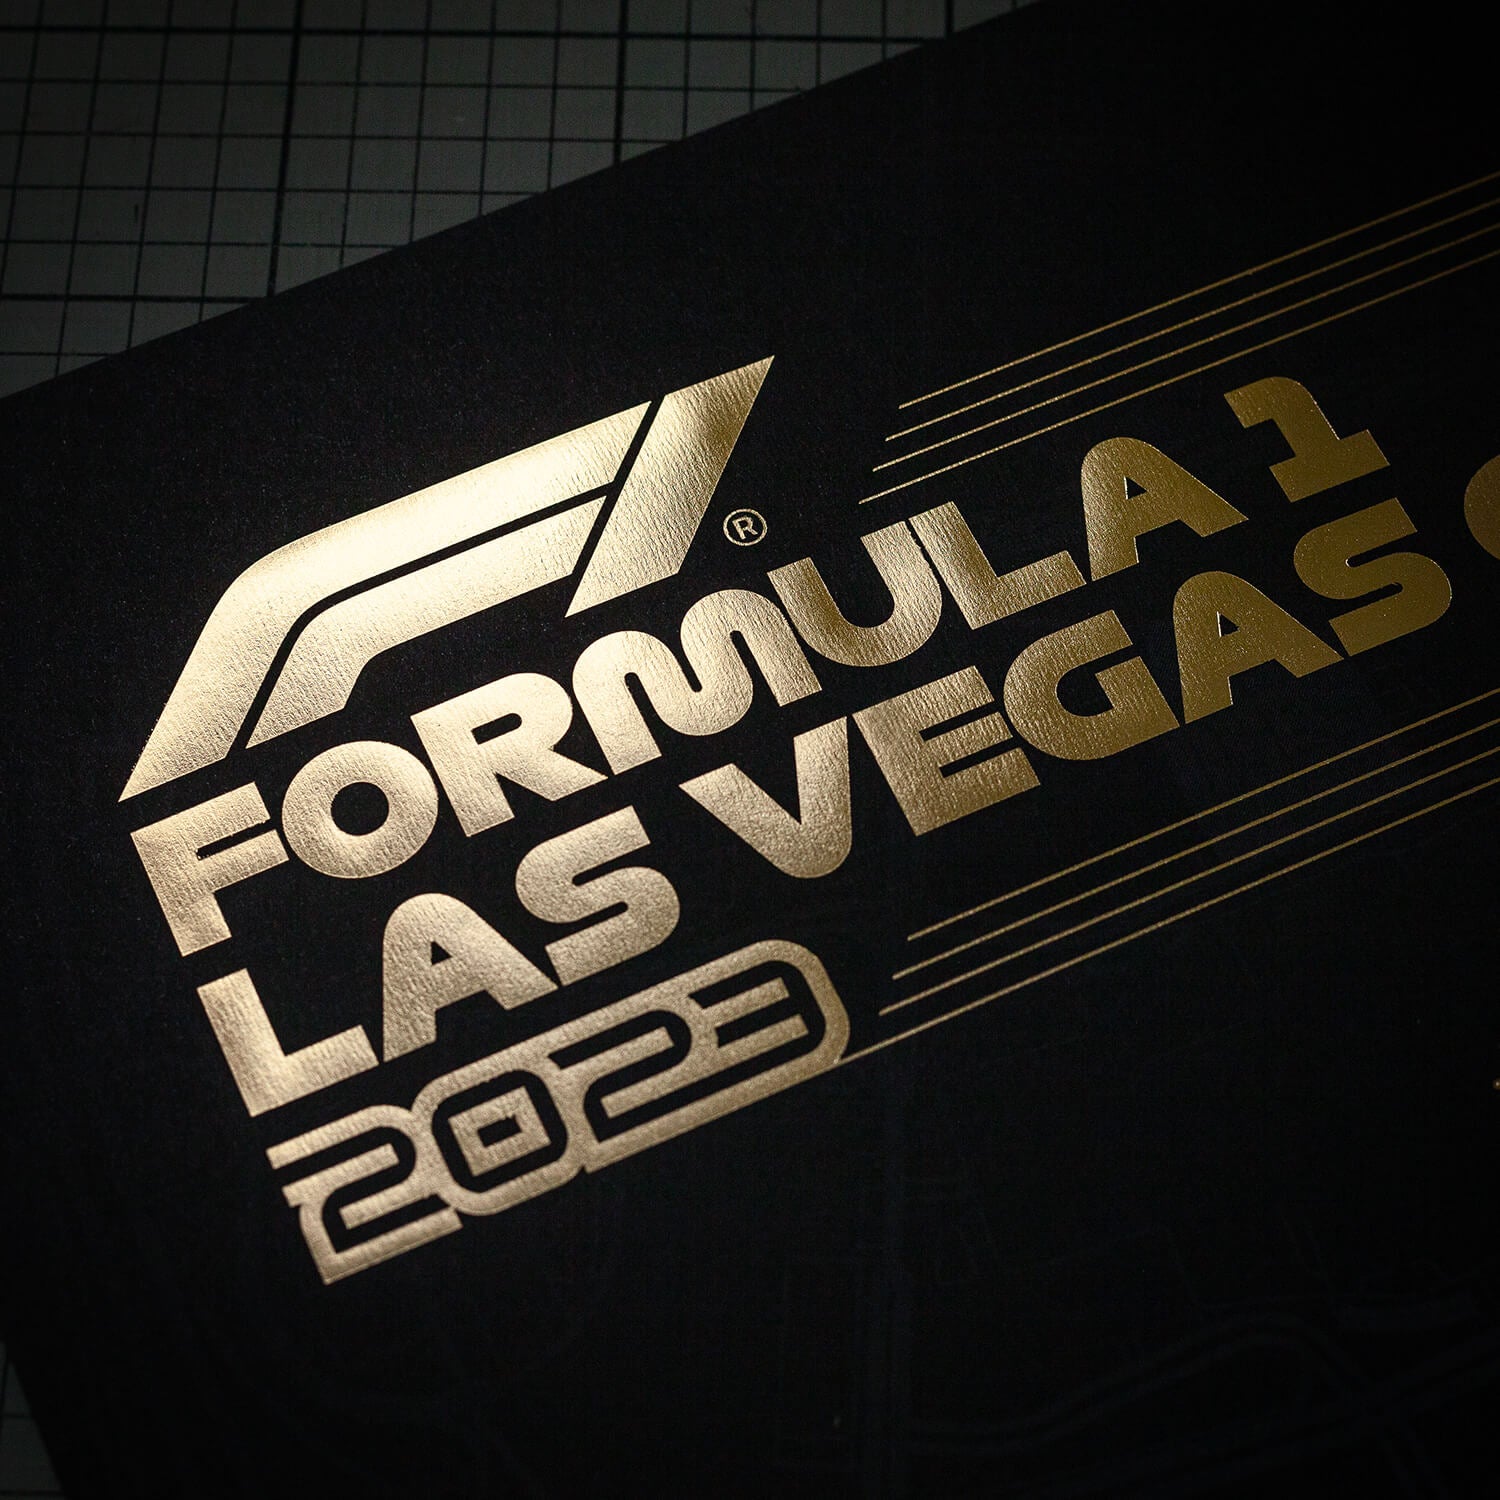 Las Vegas Strip Circuit - Formula 1 - 2023 | Collector's Edition